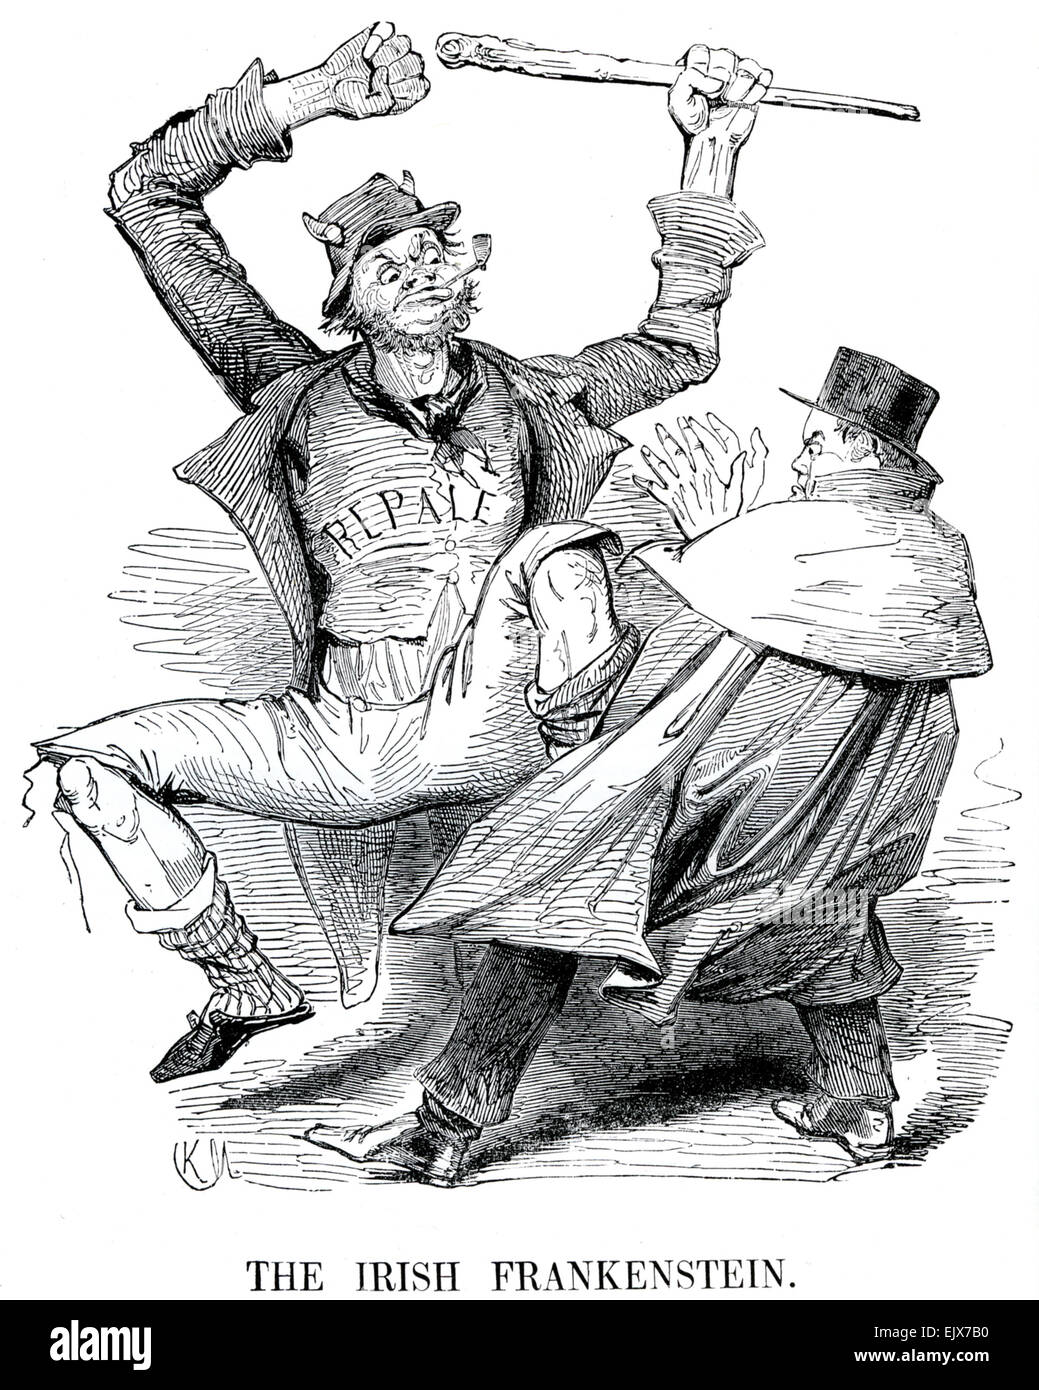 THE IRISH FRANKENSTEIN from Punch 4 November 1843 Stock Photo